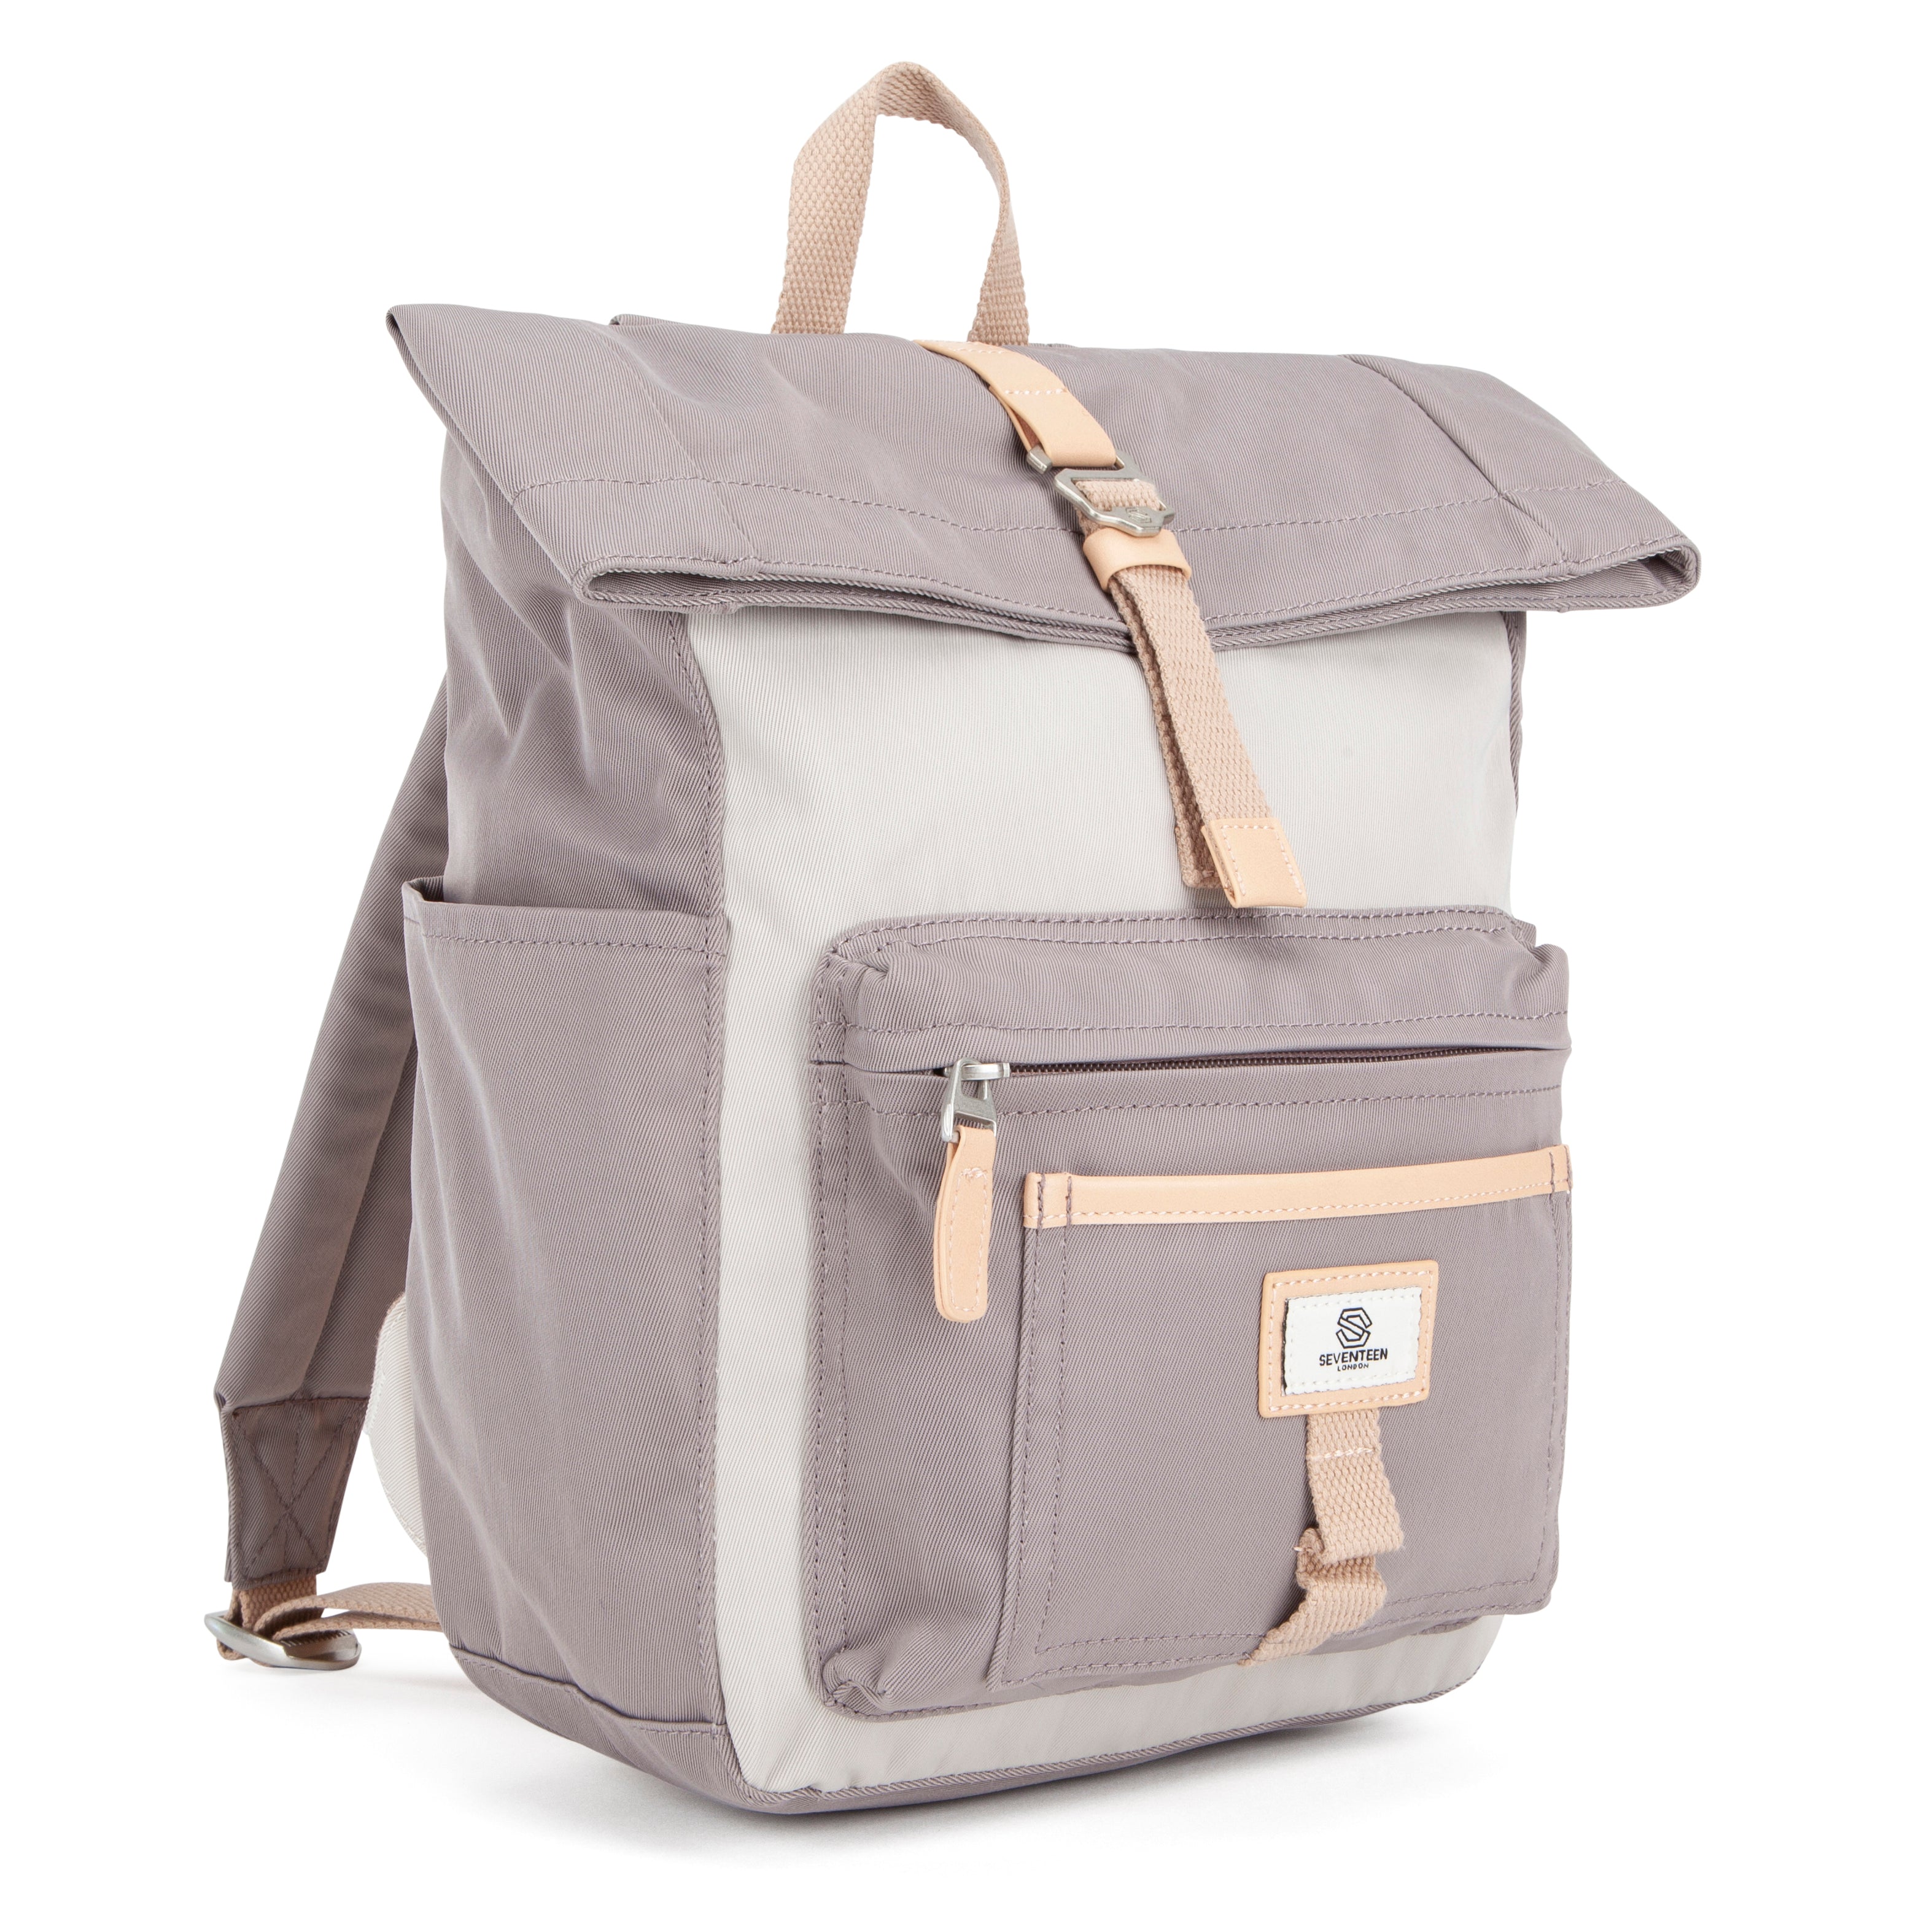 Canary Wharf Mini Backpack - Grey with Cream - Seventeen London